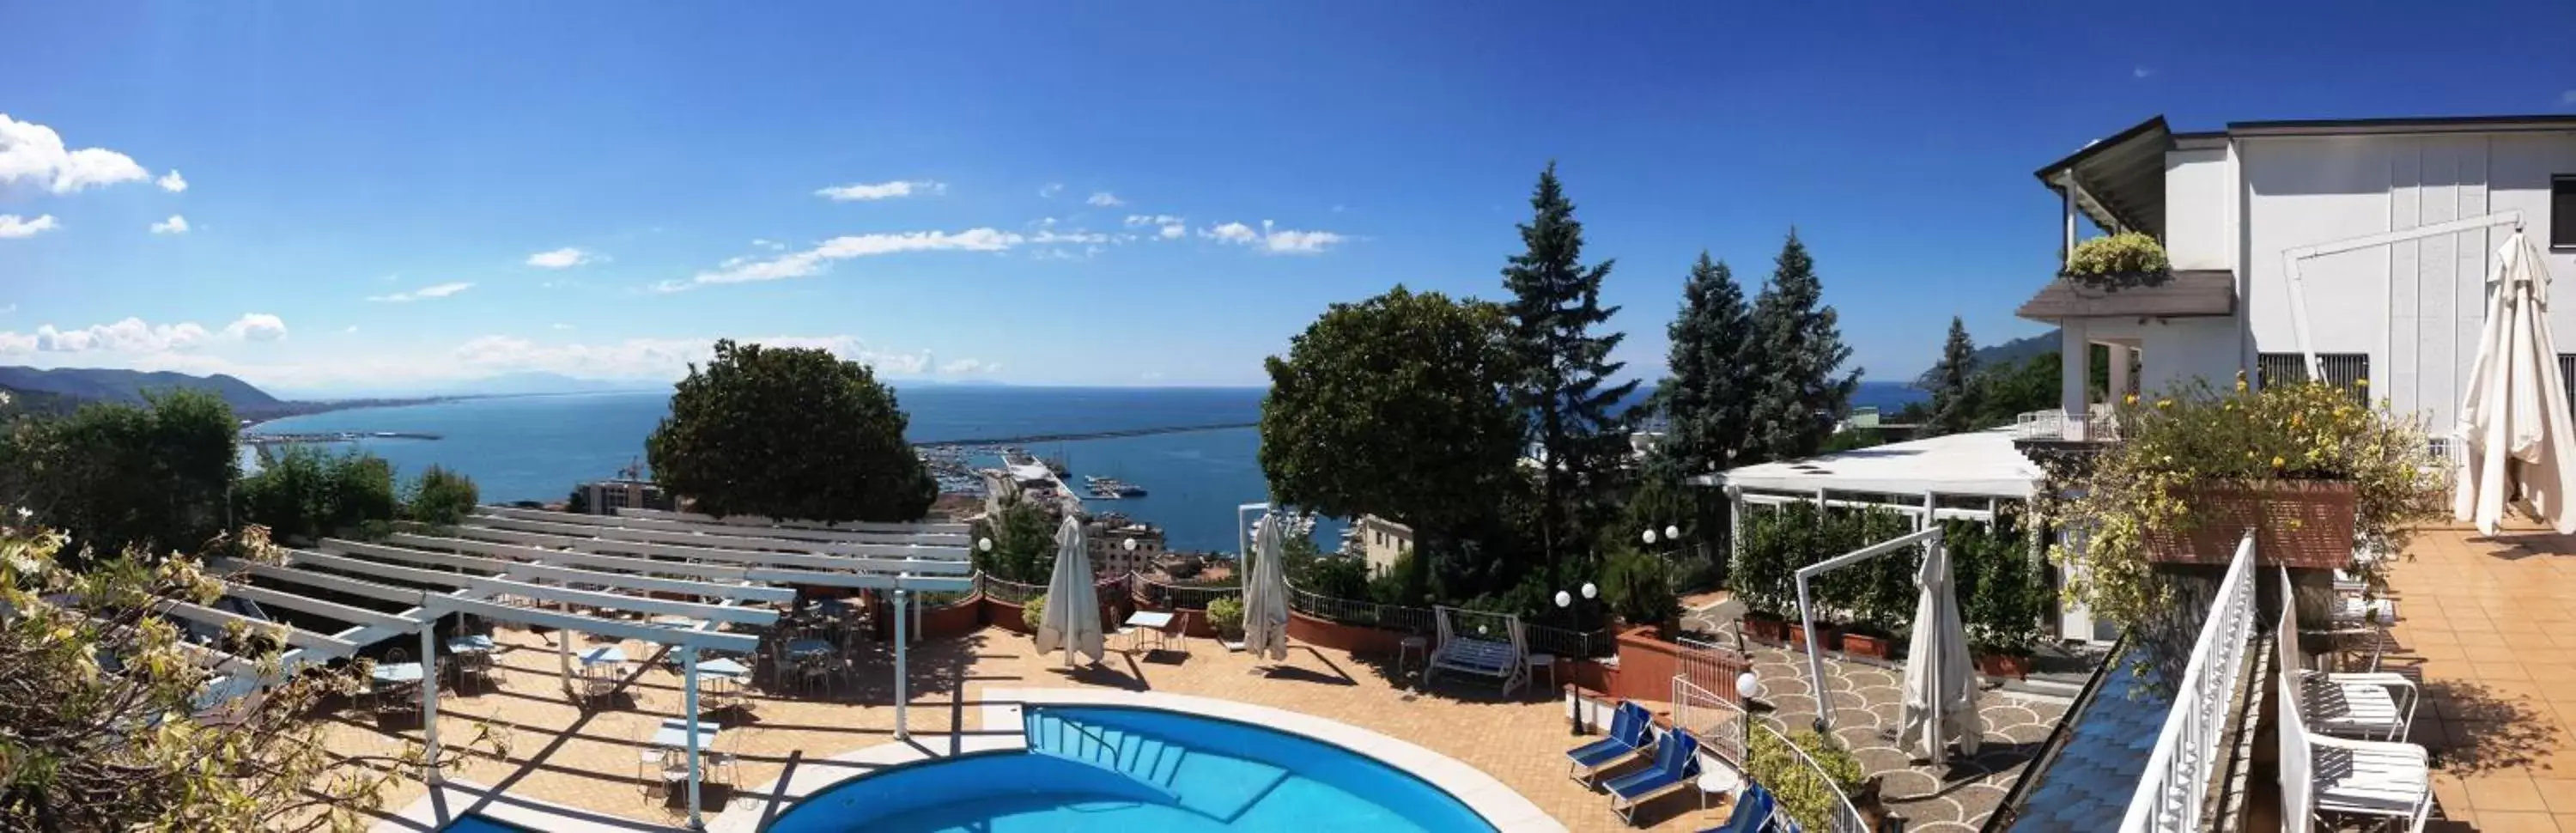 Day, Pool View in Hotel Villa Poseidon & Events